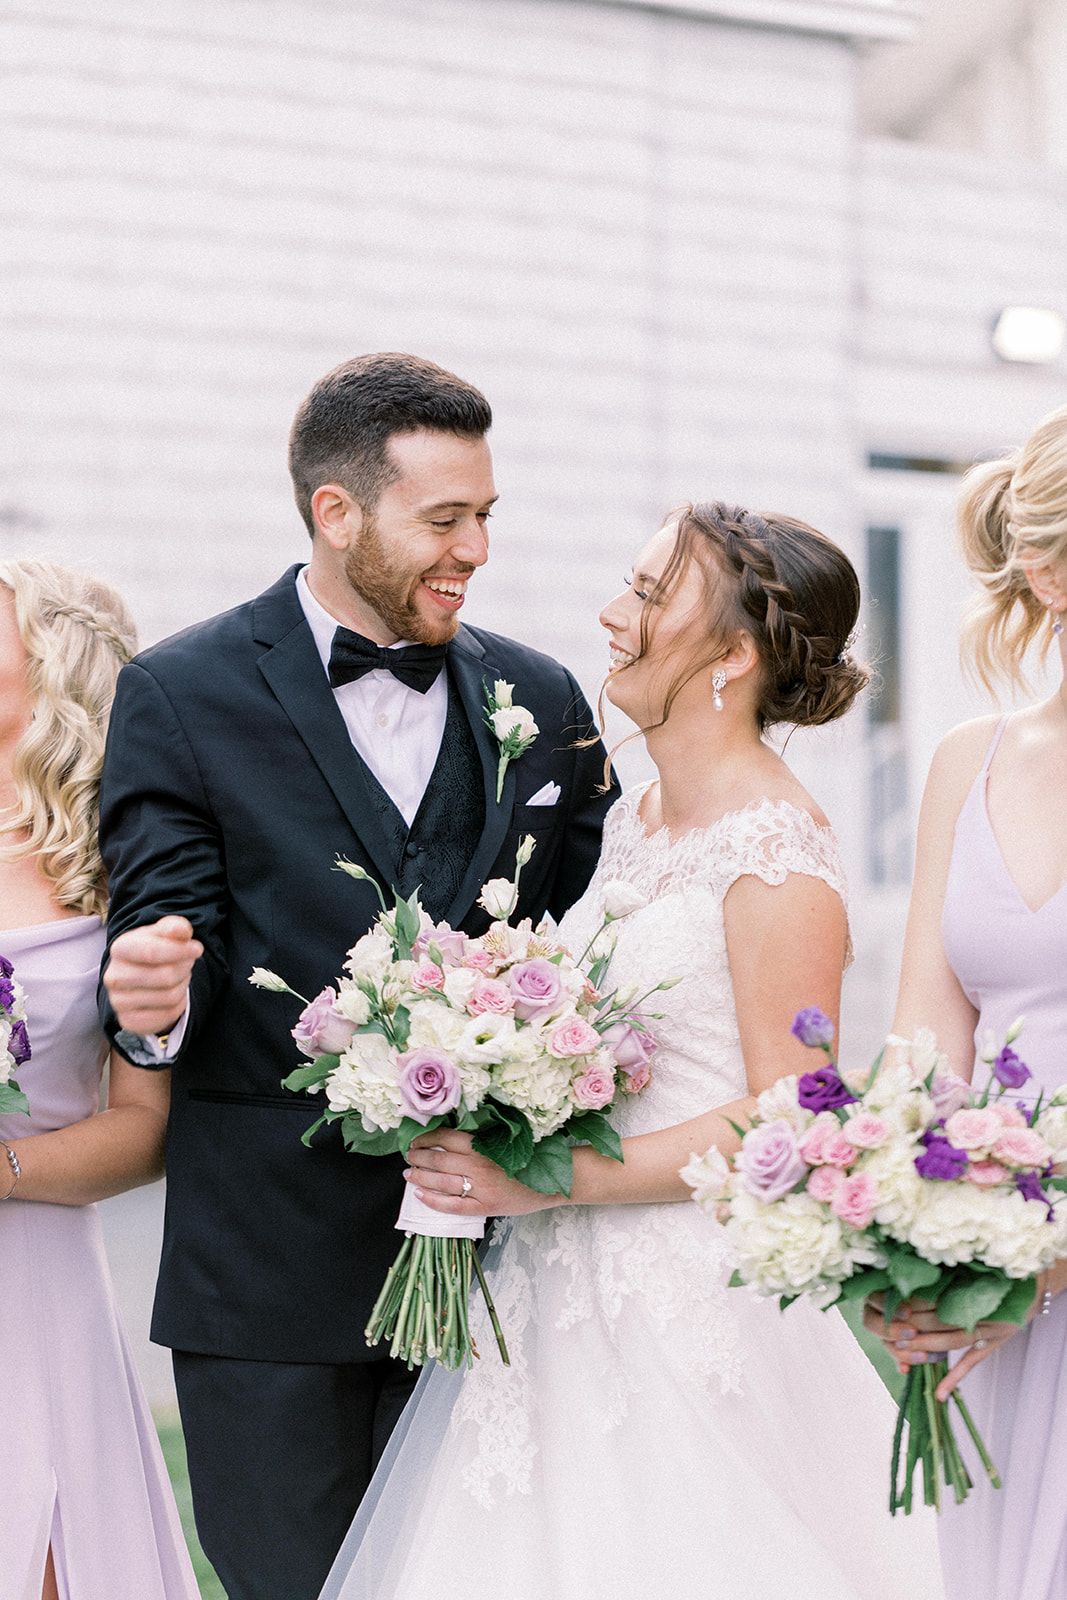 Pennsylvania wedding photographer captures couple celebrating